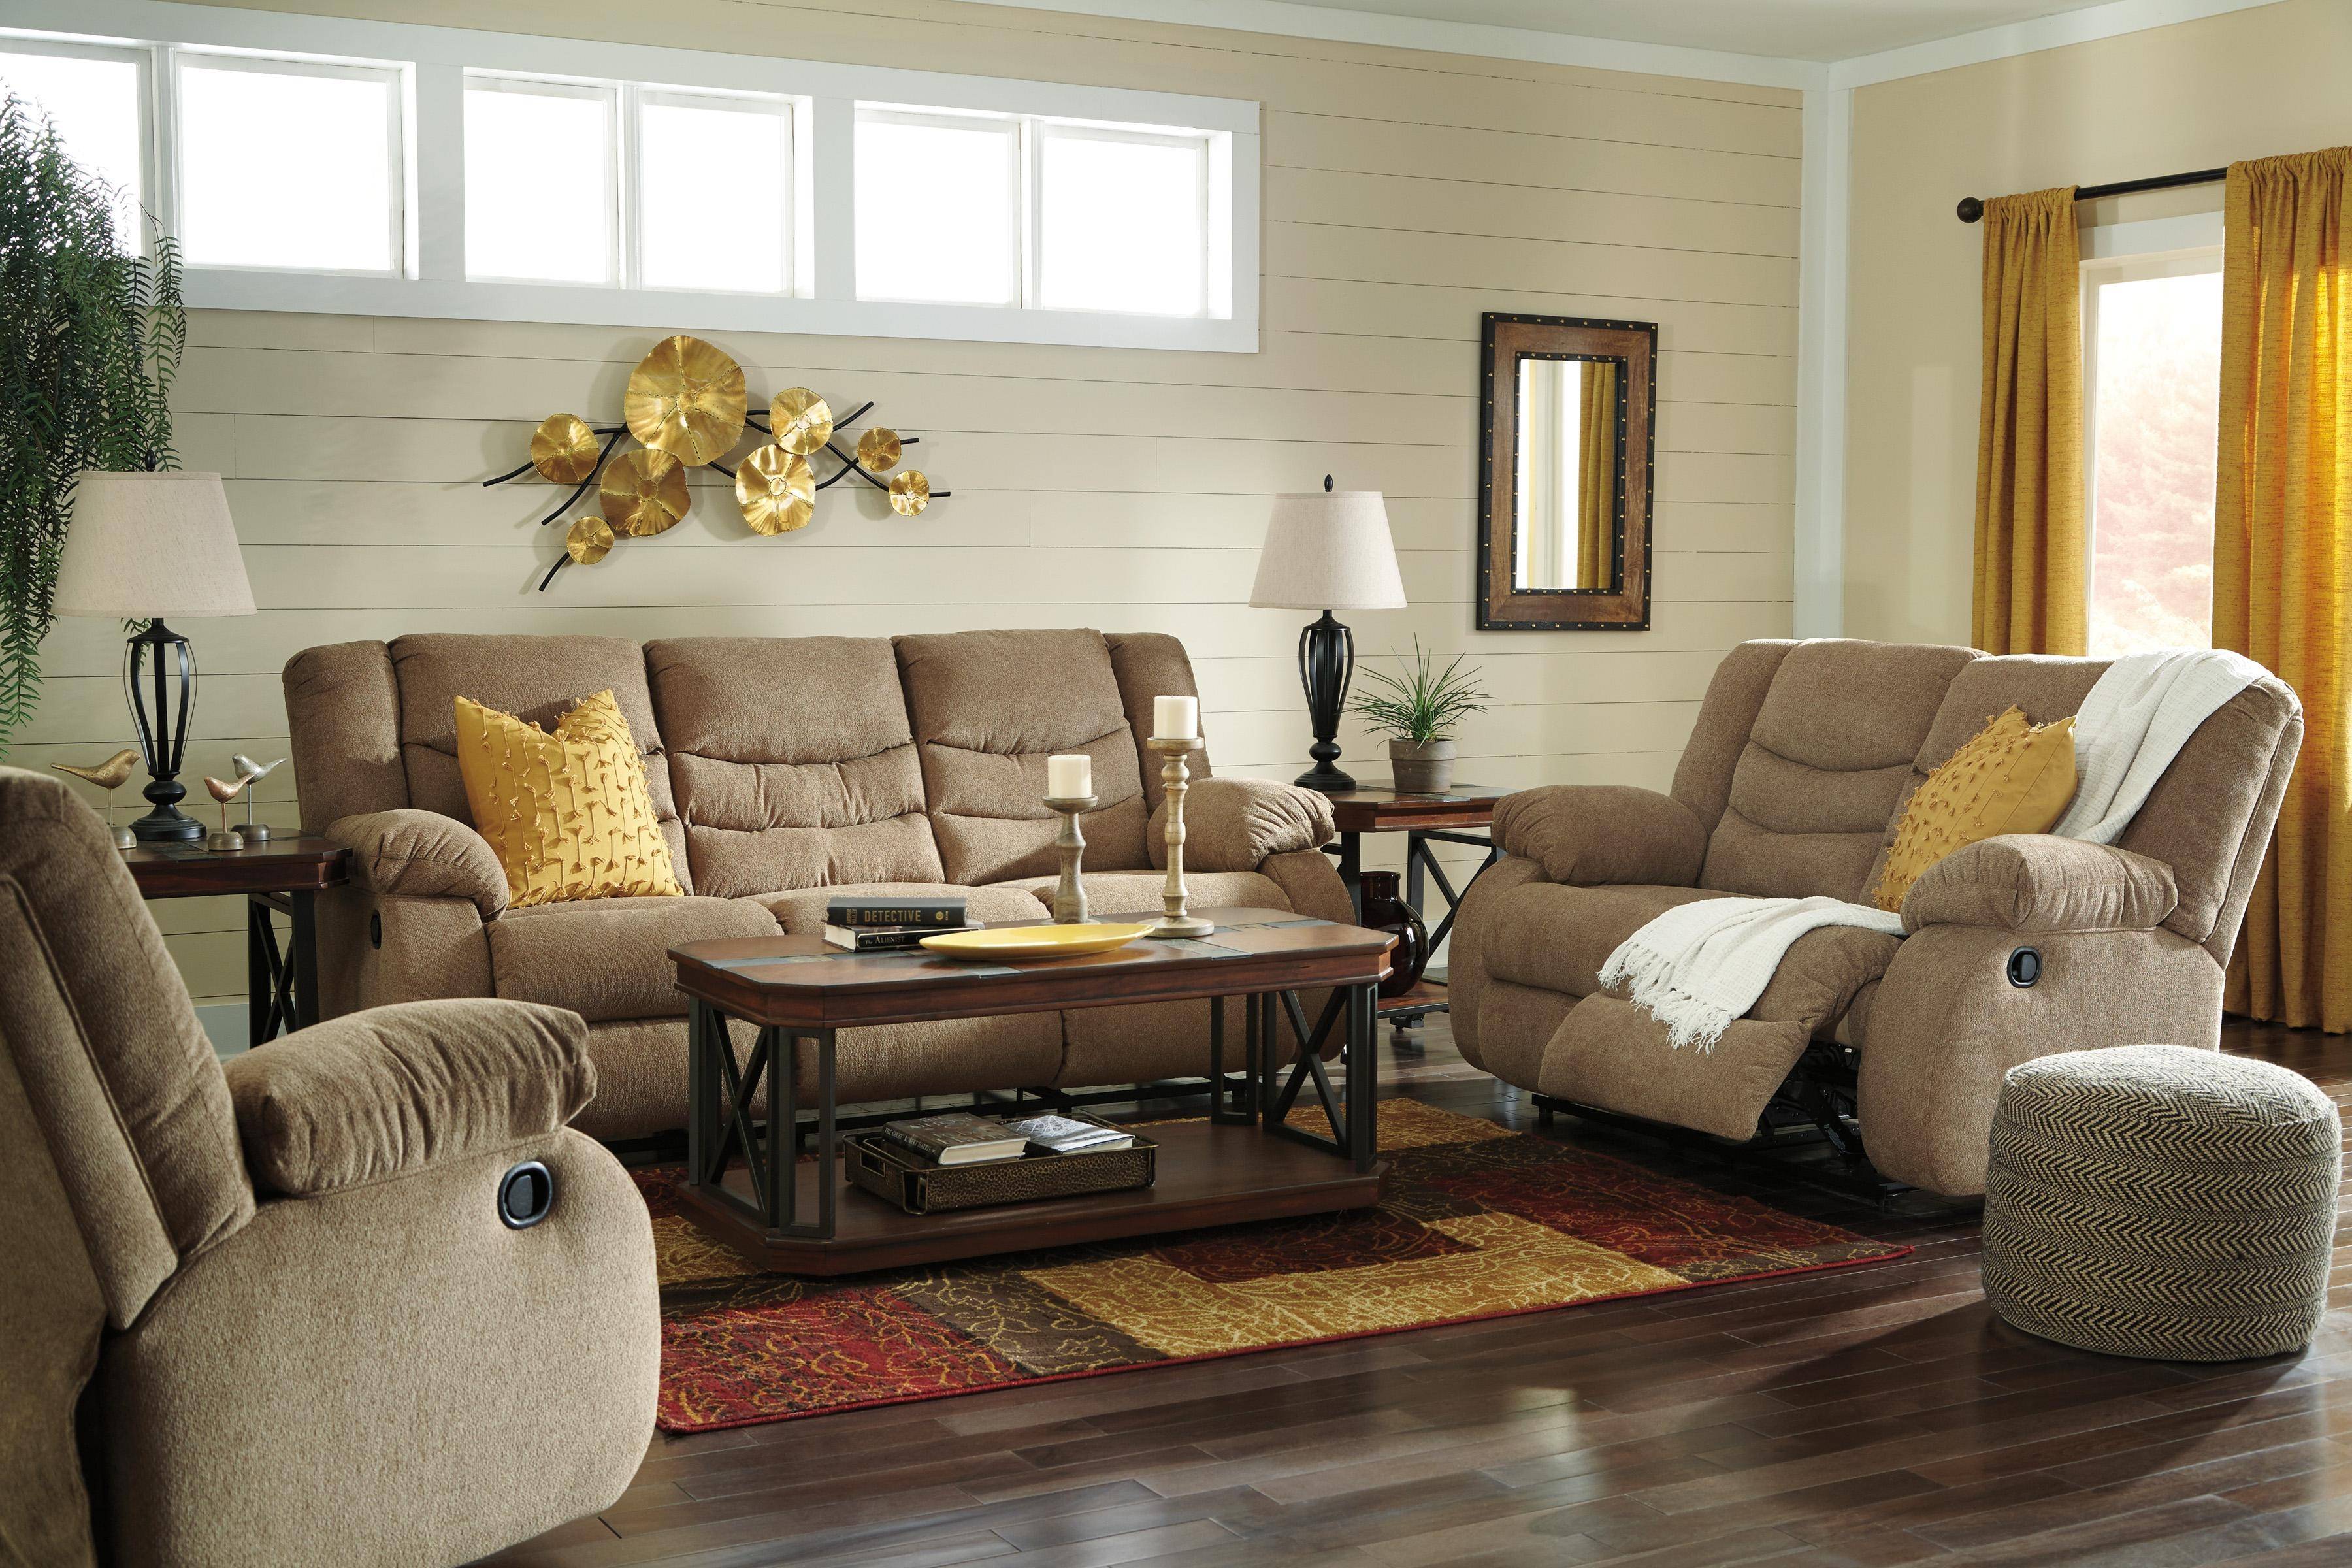 Minimalist Fabric Living Room Furniture with Simple Decor